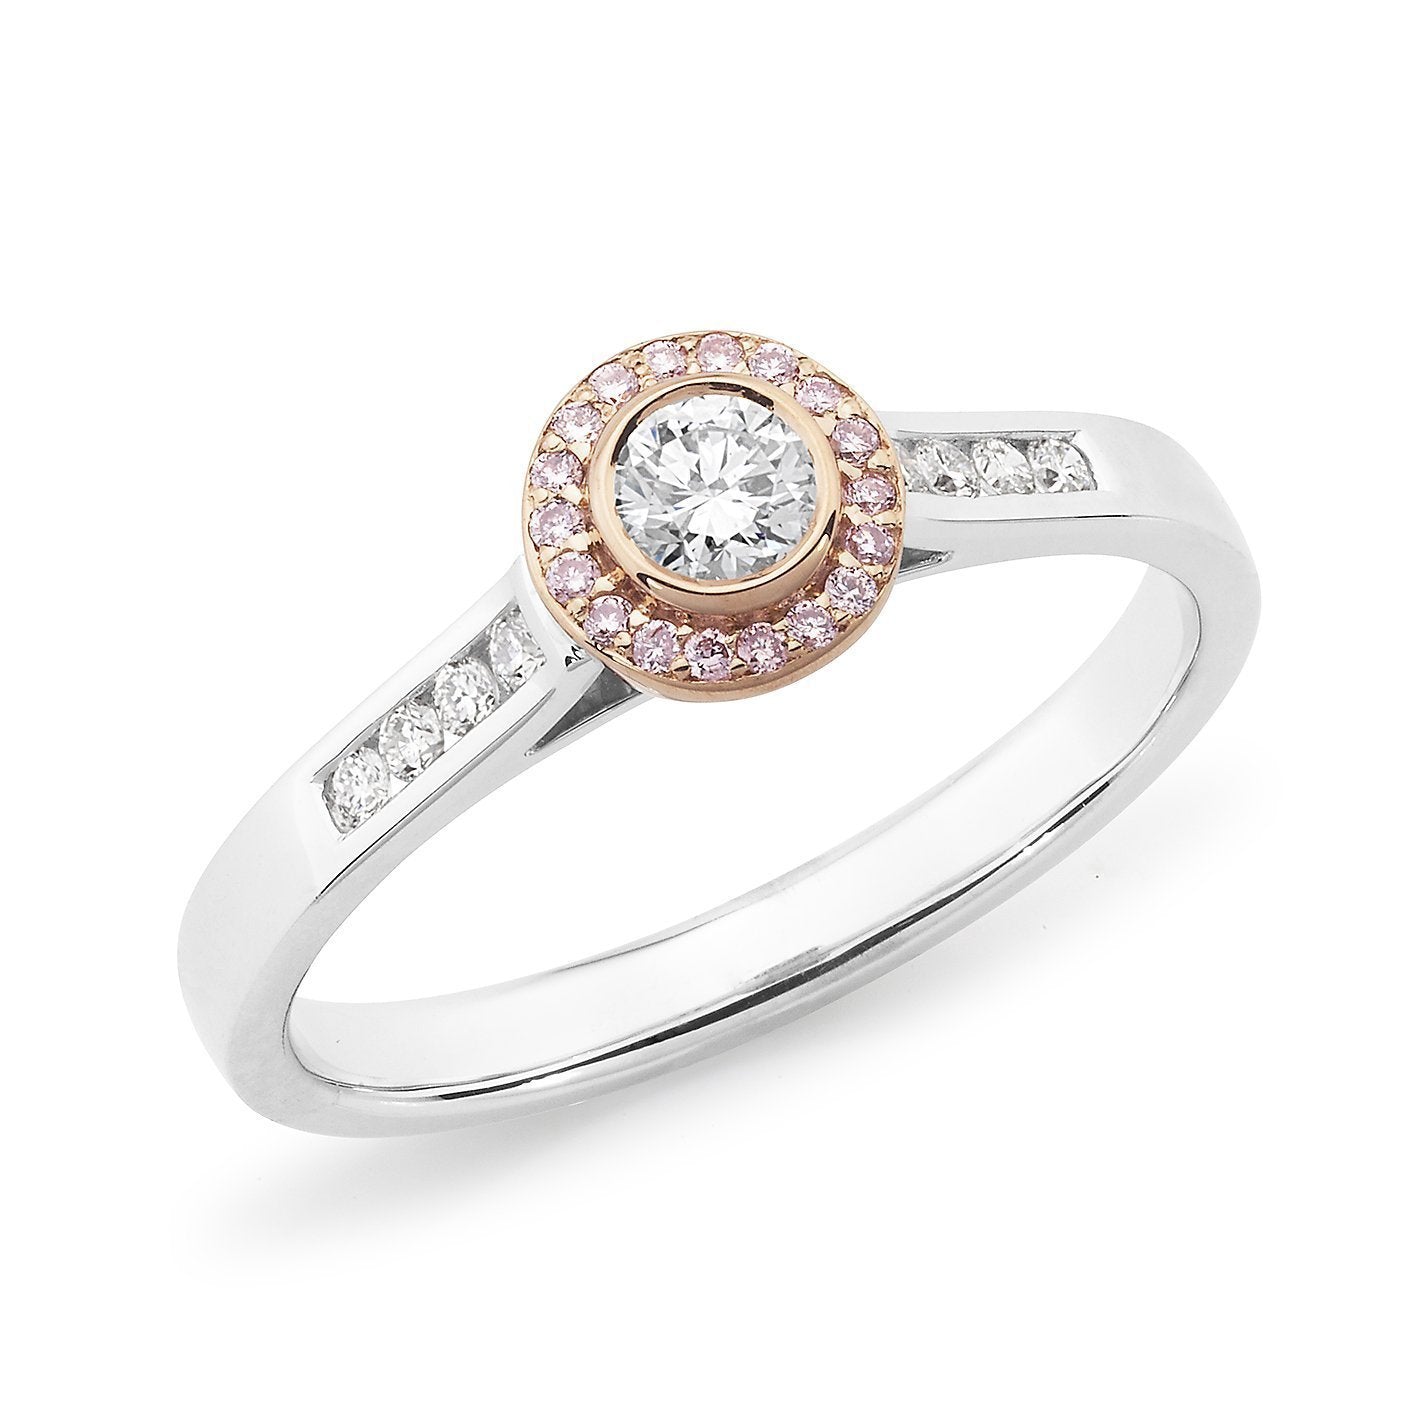 PINK CAVIAR 0.34ct Pink Diamond Halo Ring in 18ct White & Rose Gold